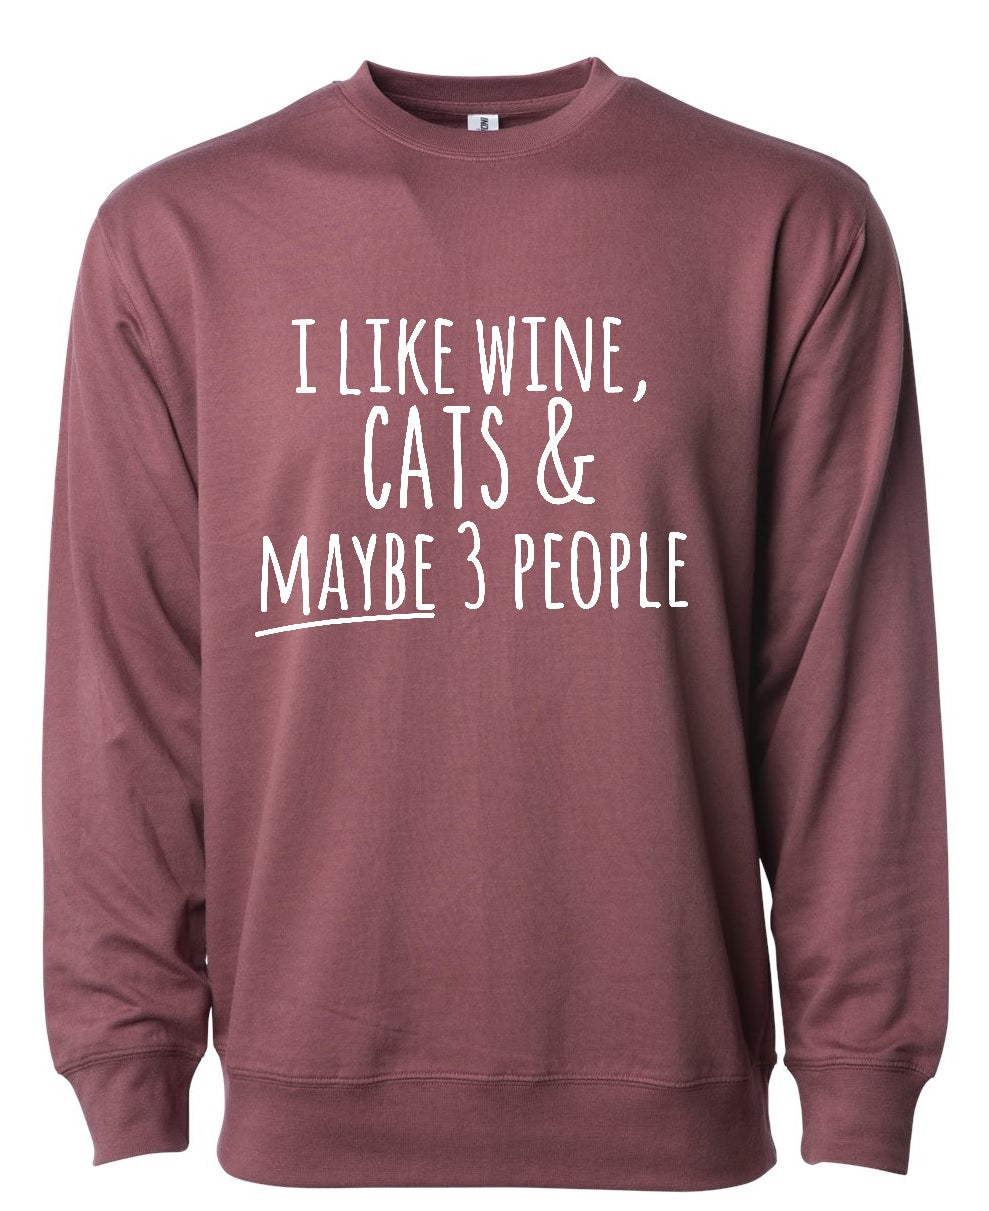 Copy of "I like wine, cats & MAYBE 3 people" Sweatshirt